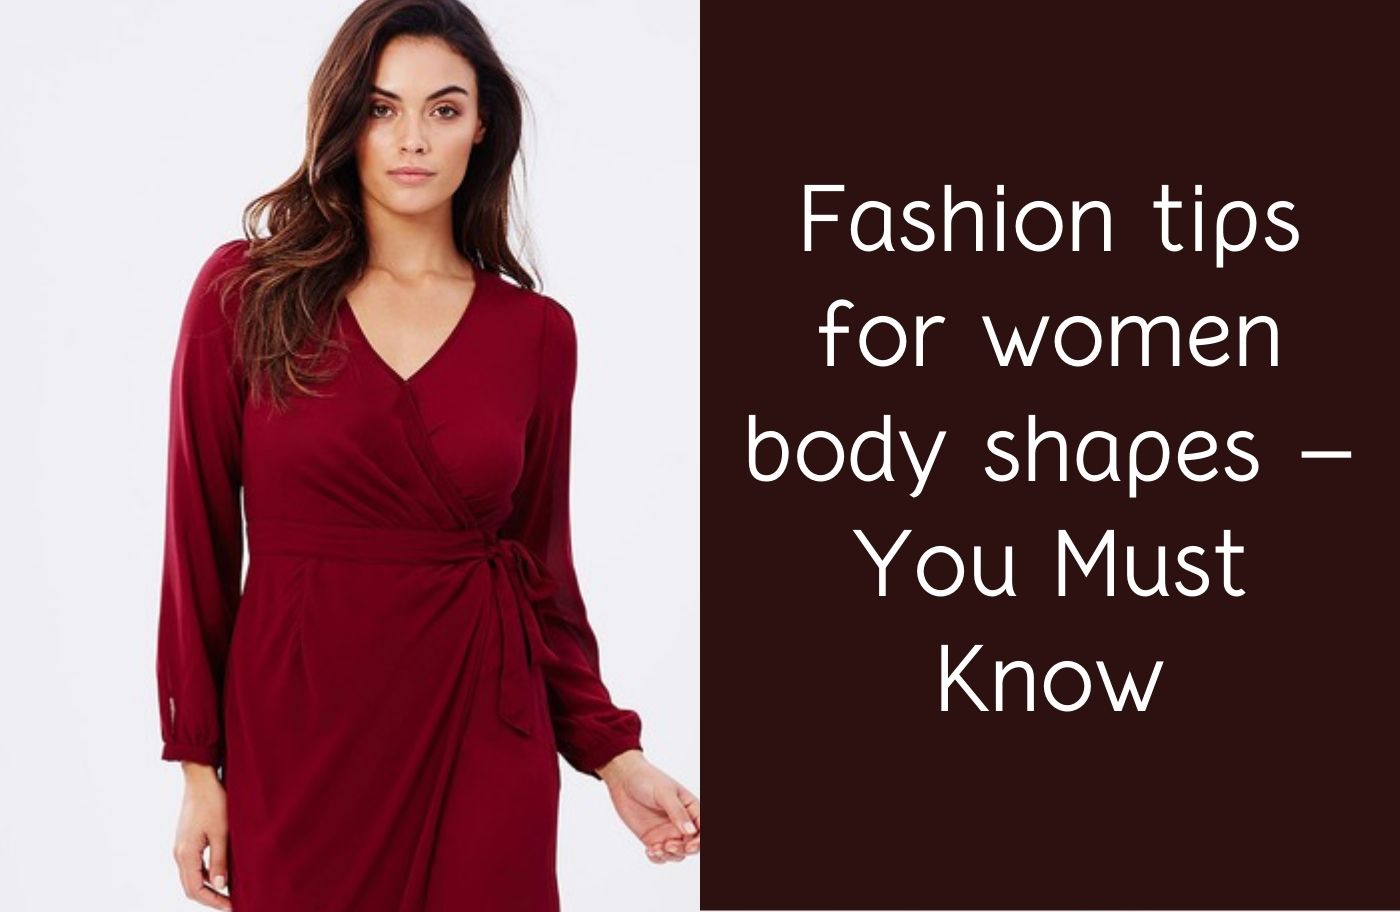 Fashion tips for women body shapes - The Fashion Fantasy